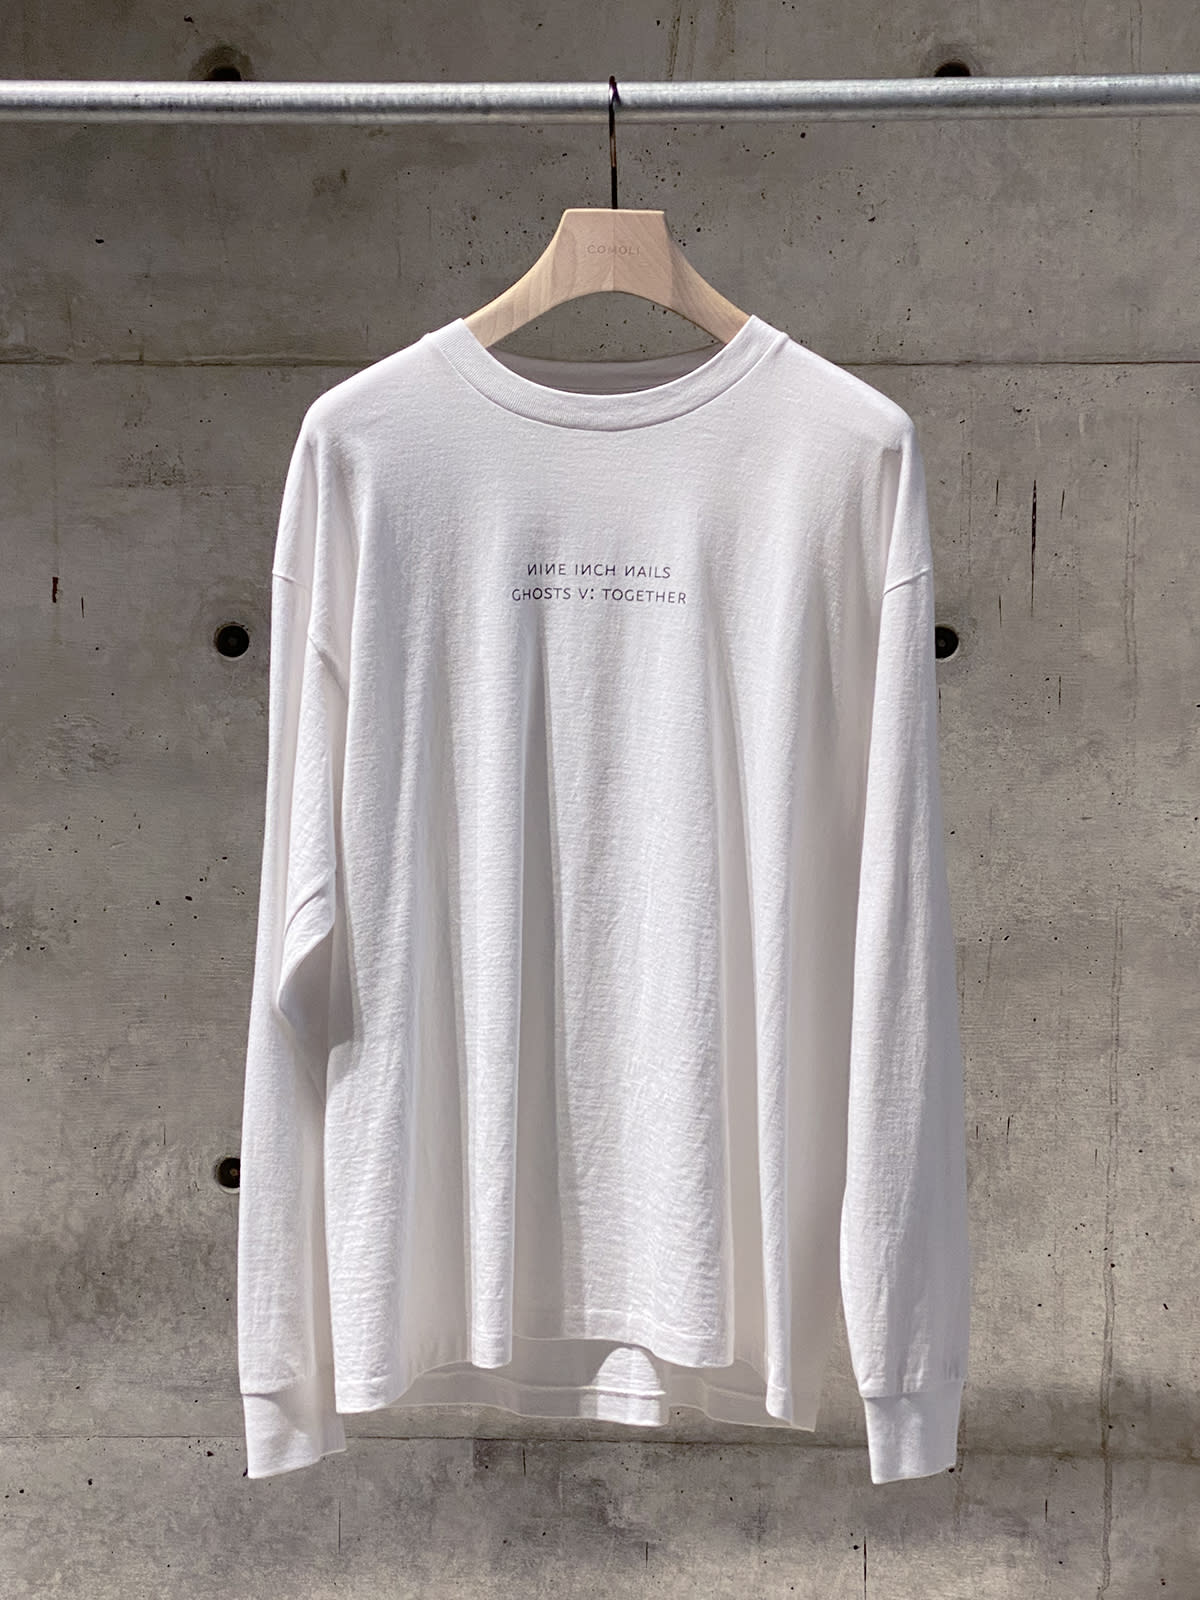 nin ghosts ⅴ together sl t-shirt1